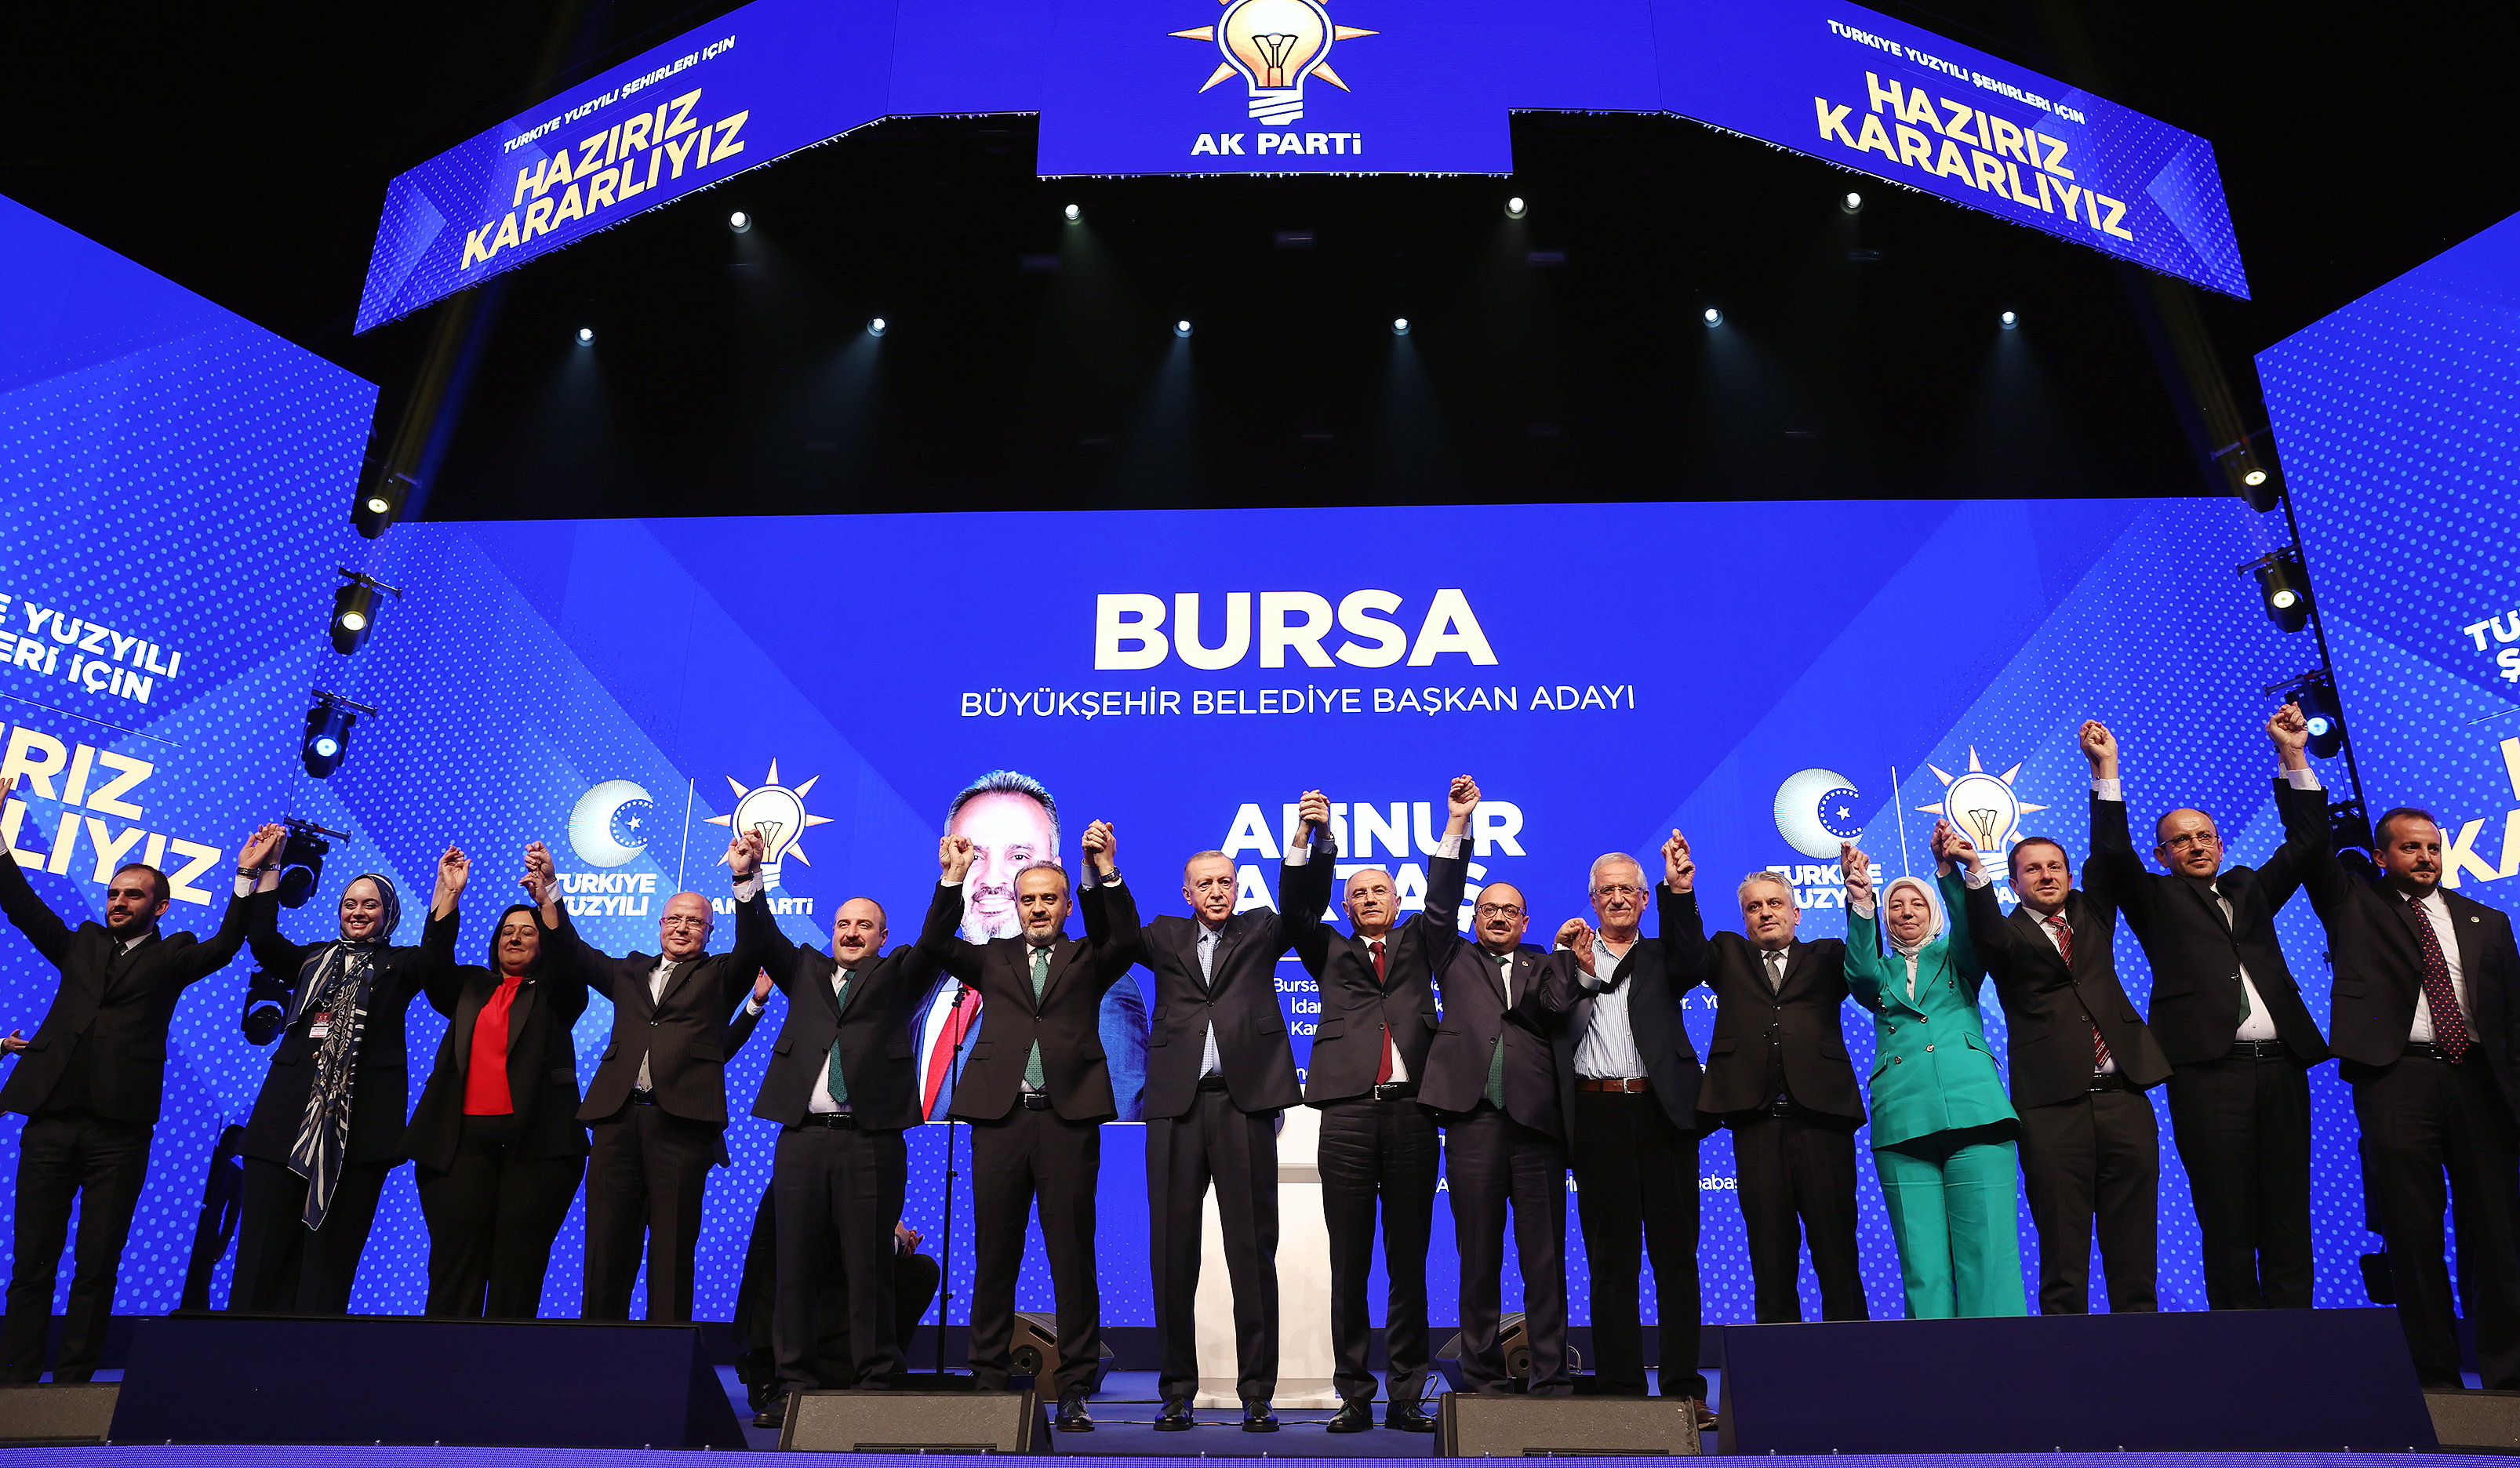 AK Parti’nin Bursa adayı, mevcut Başkan Alinur Aktaş oldu